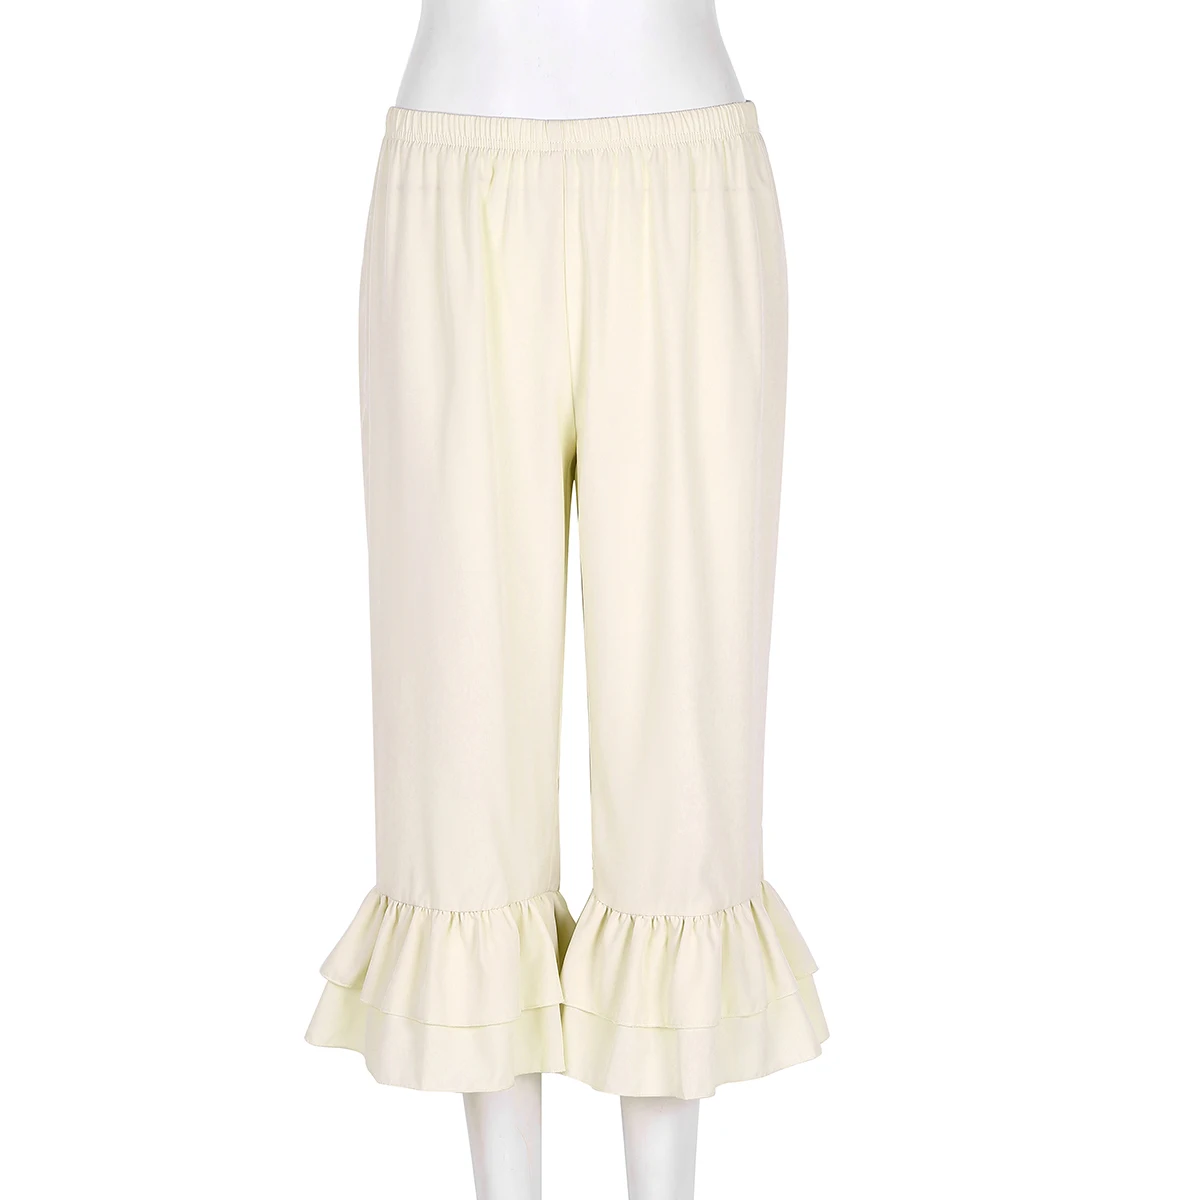 Women Ladies Sweet Dance Trousers Retro Vintage Elastic Waist Ruffles Hem Pantaloons Bloomers Underpants Victorian Era Costume capri trousers